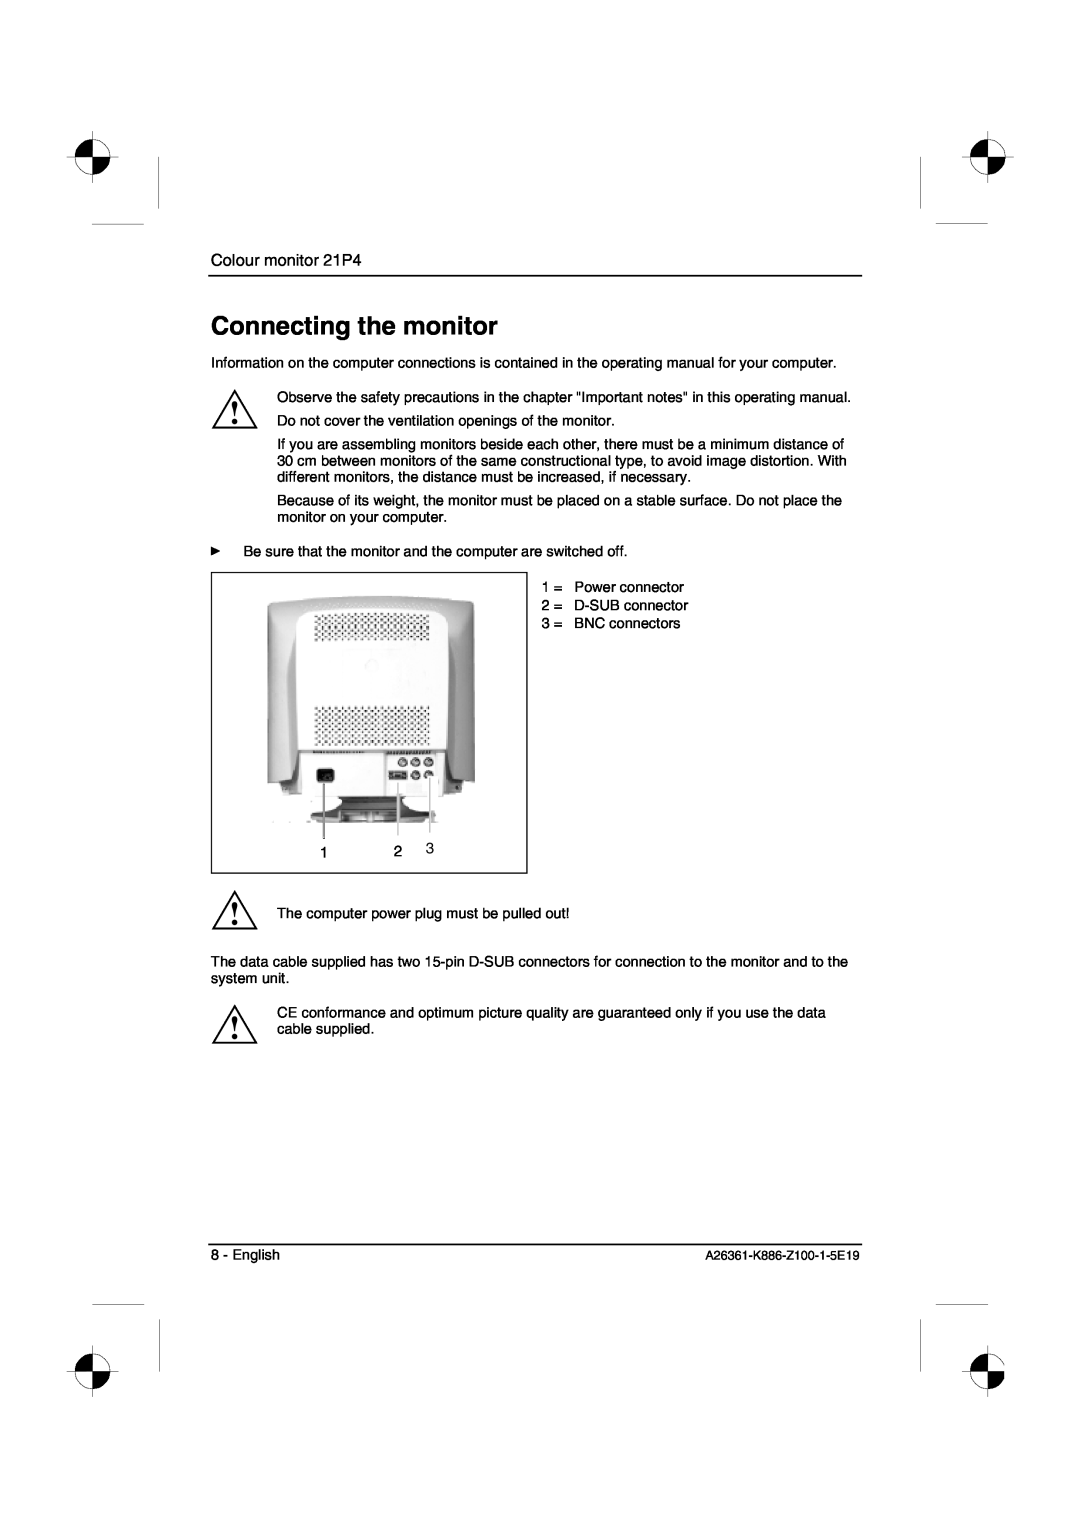 Fujitsu Siemens Computers manual Connecting the monitor, Colour monitor 21P4 